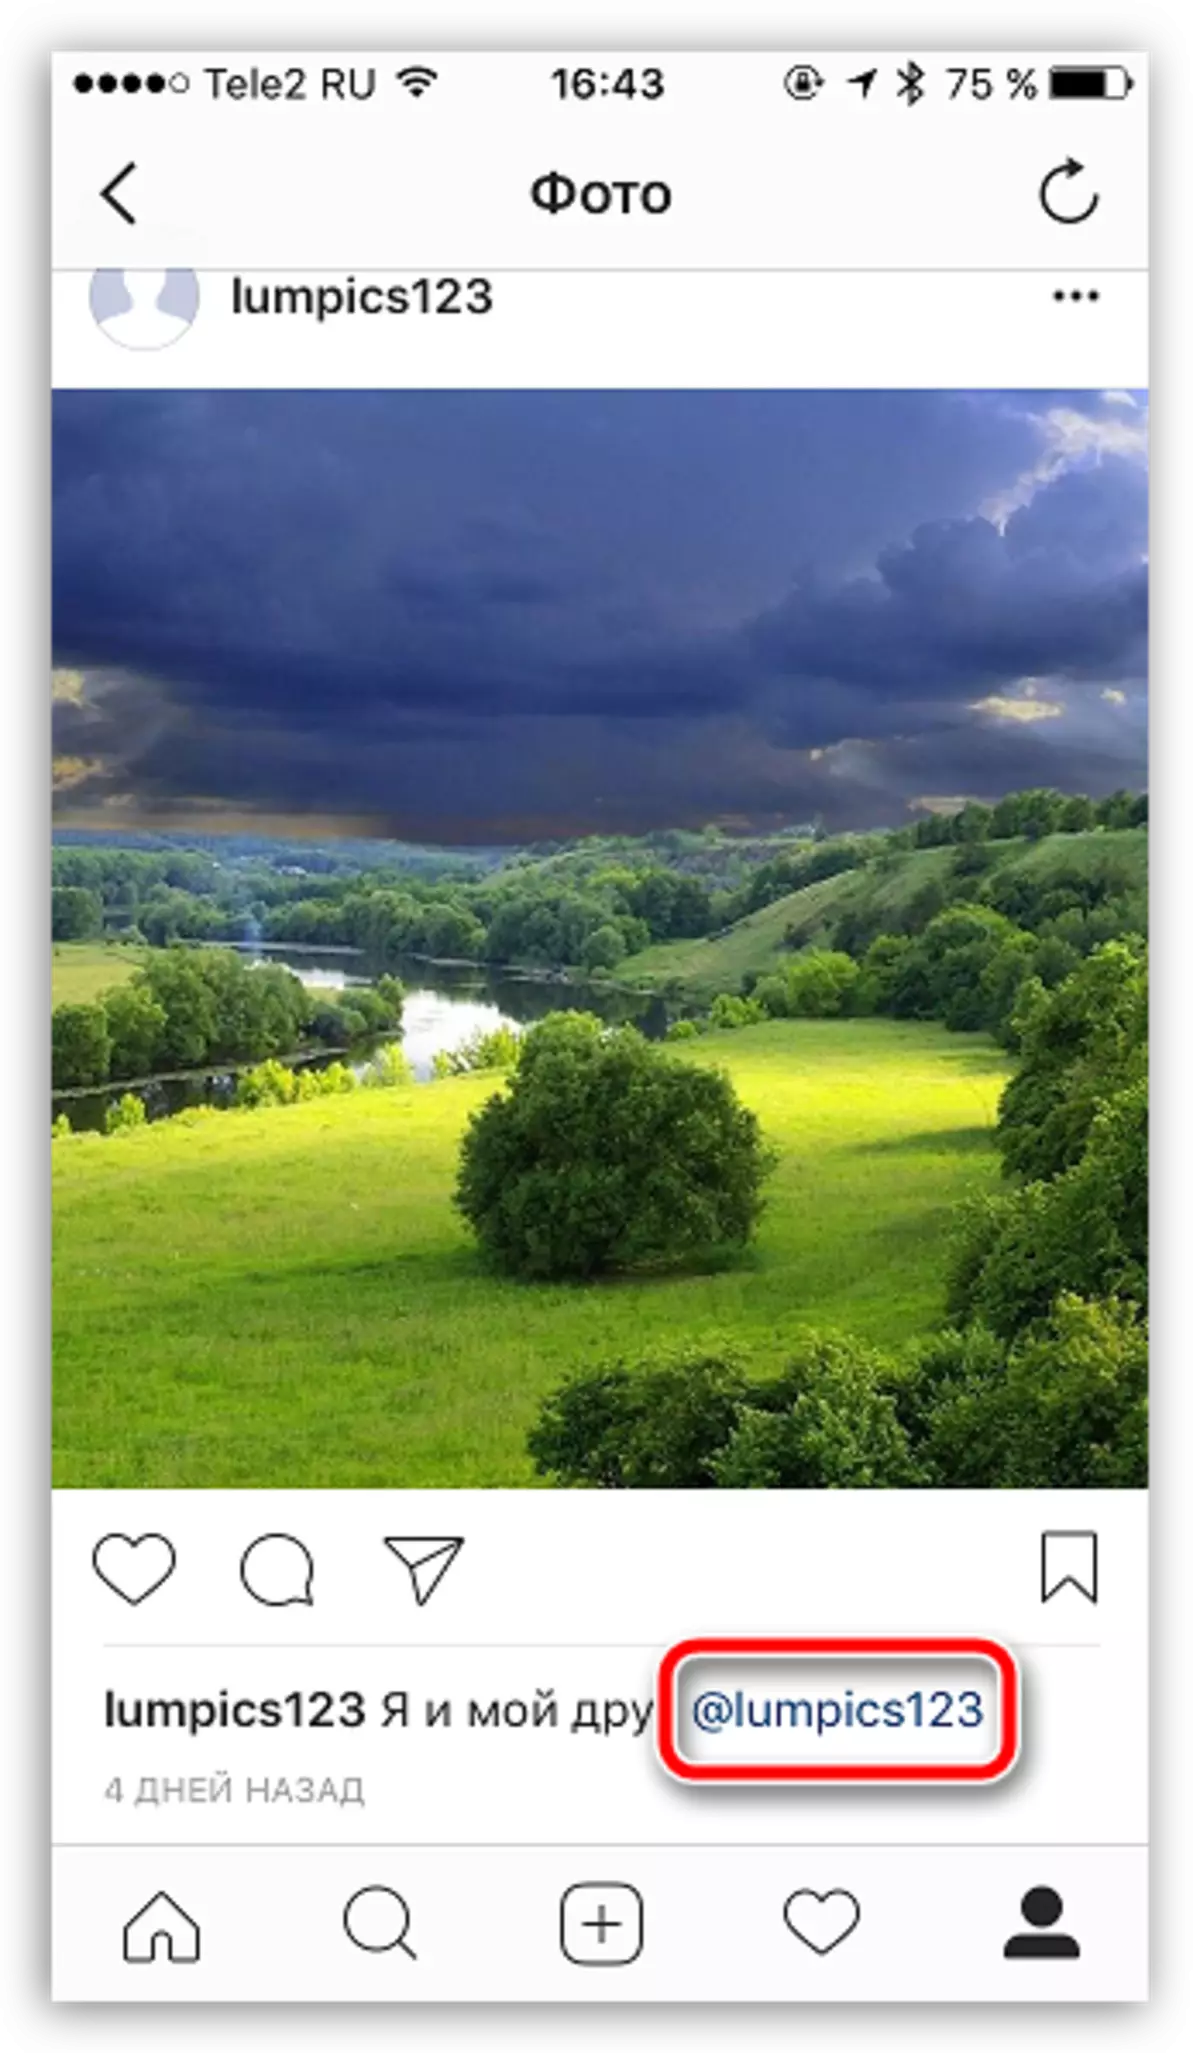 Instagram માં નામ આપવામાં આવ્યું વપરાશકર્તા